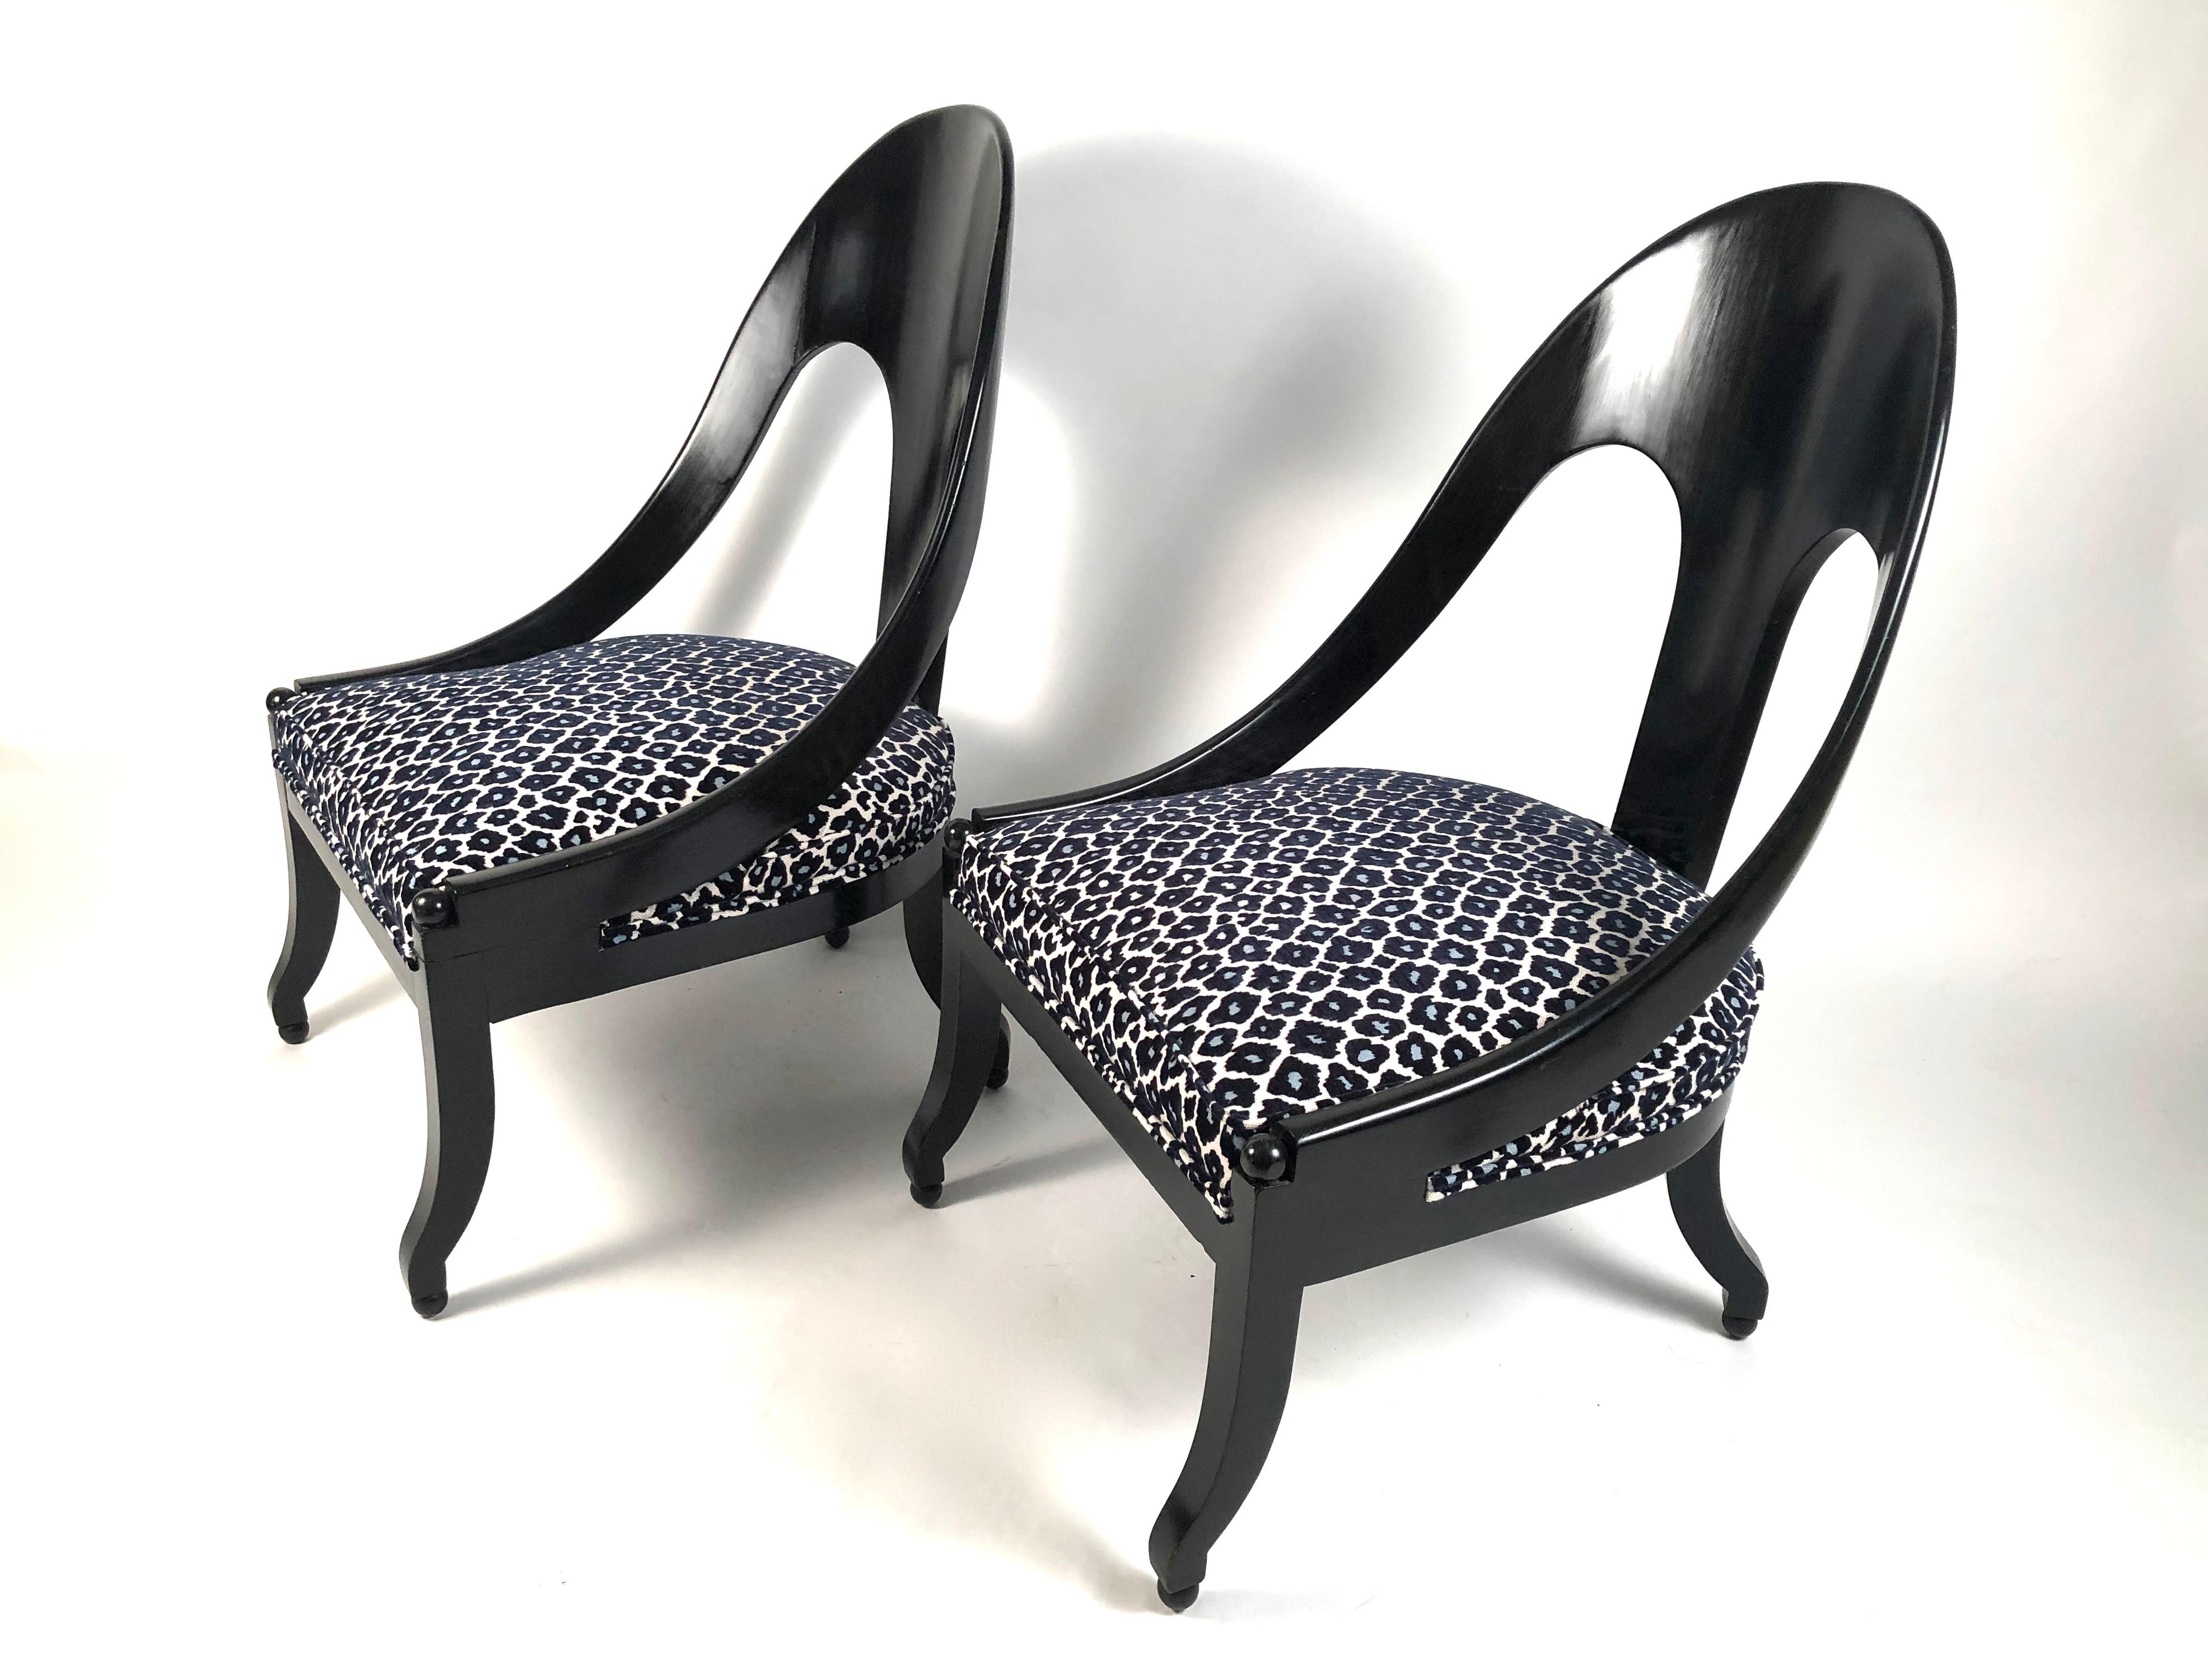 Carved Pair of Vintage Black Hollywood Regency Style Spoon Back Chairs